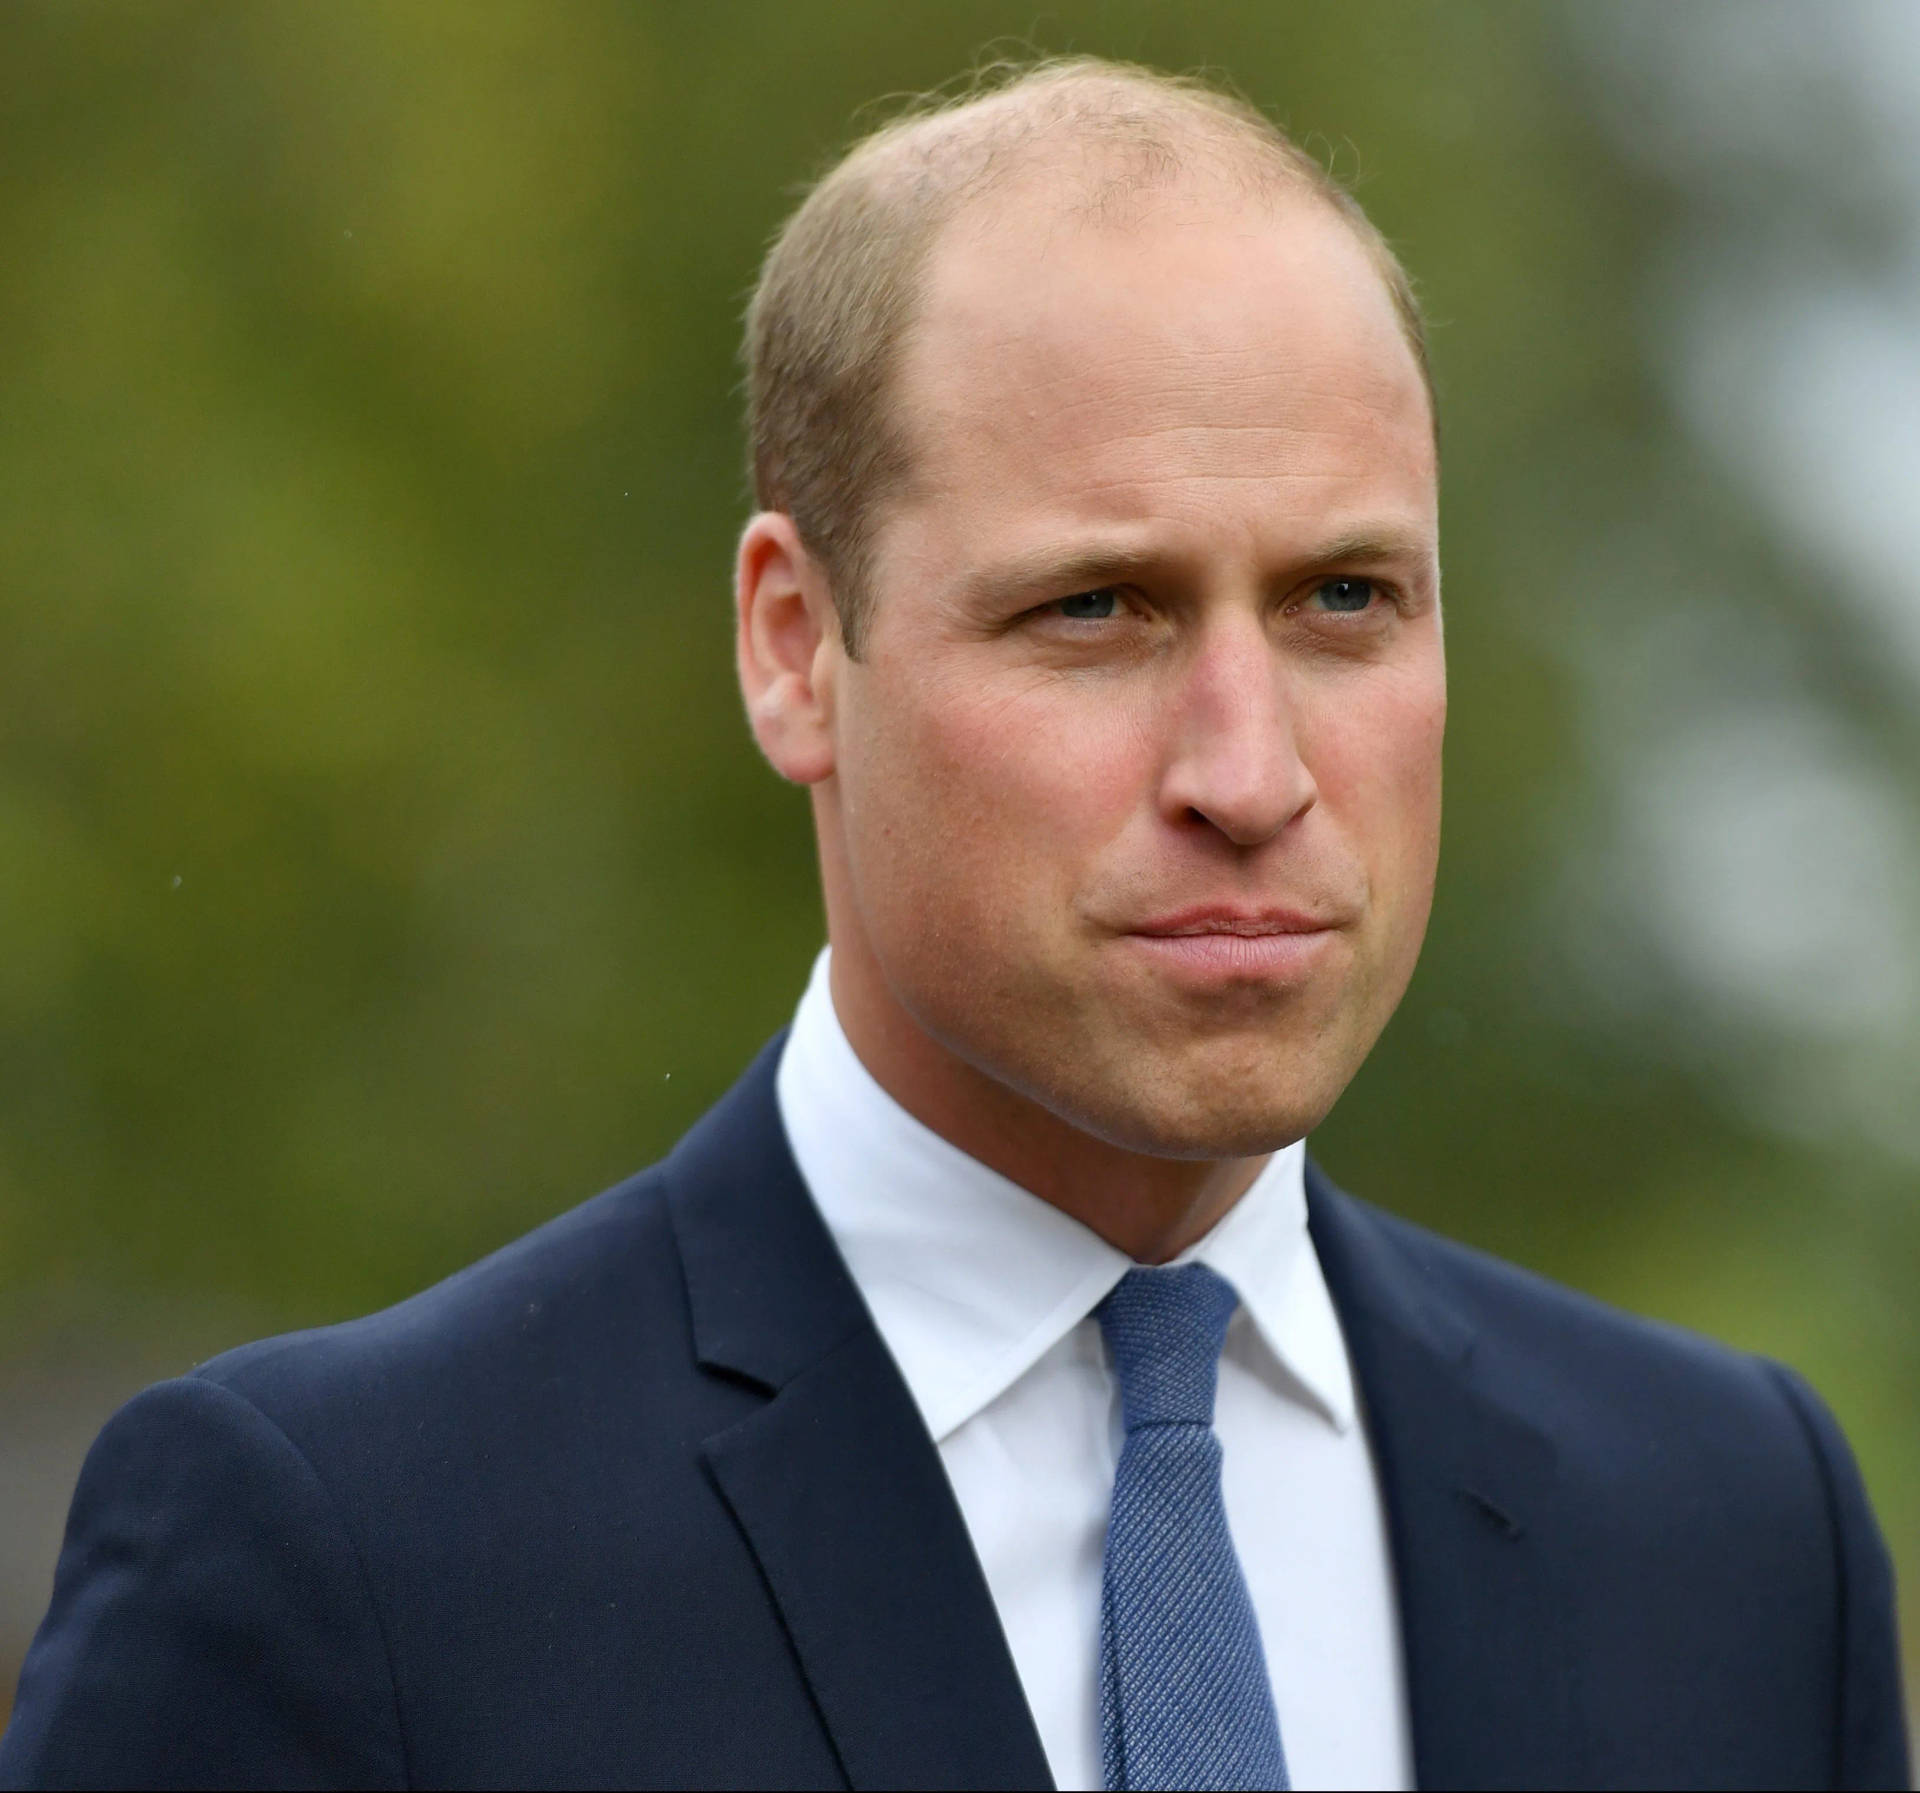 Prince William, The Future King Of Britain